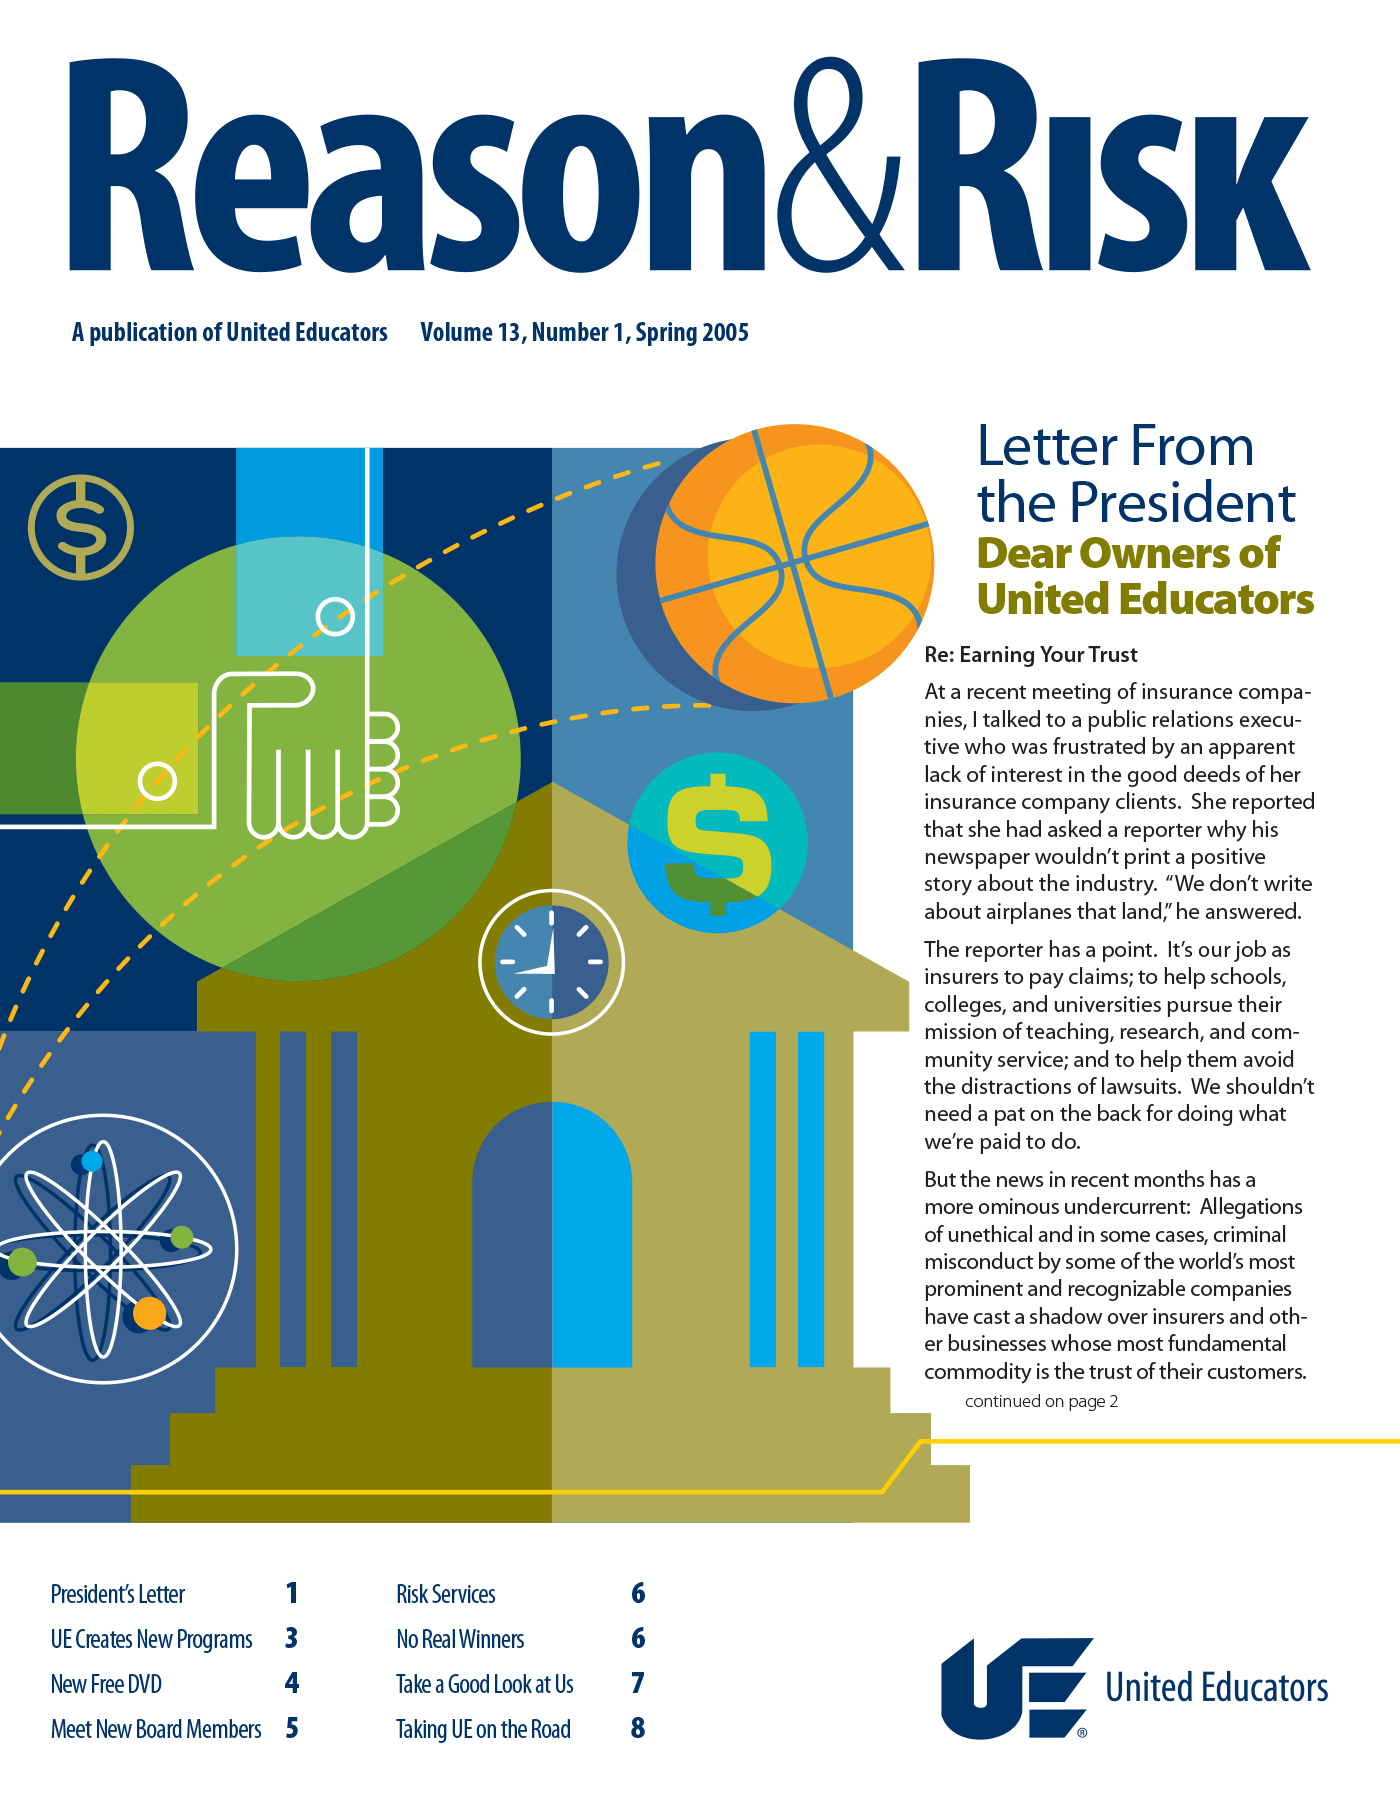 Reason & Risk